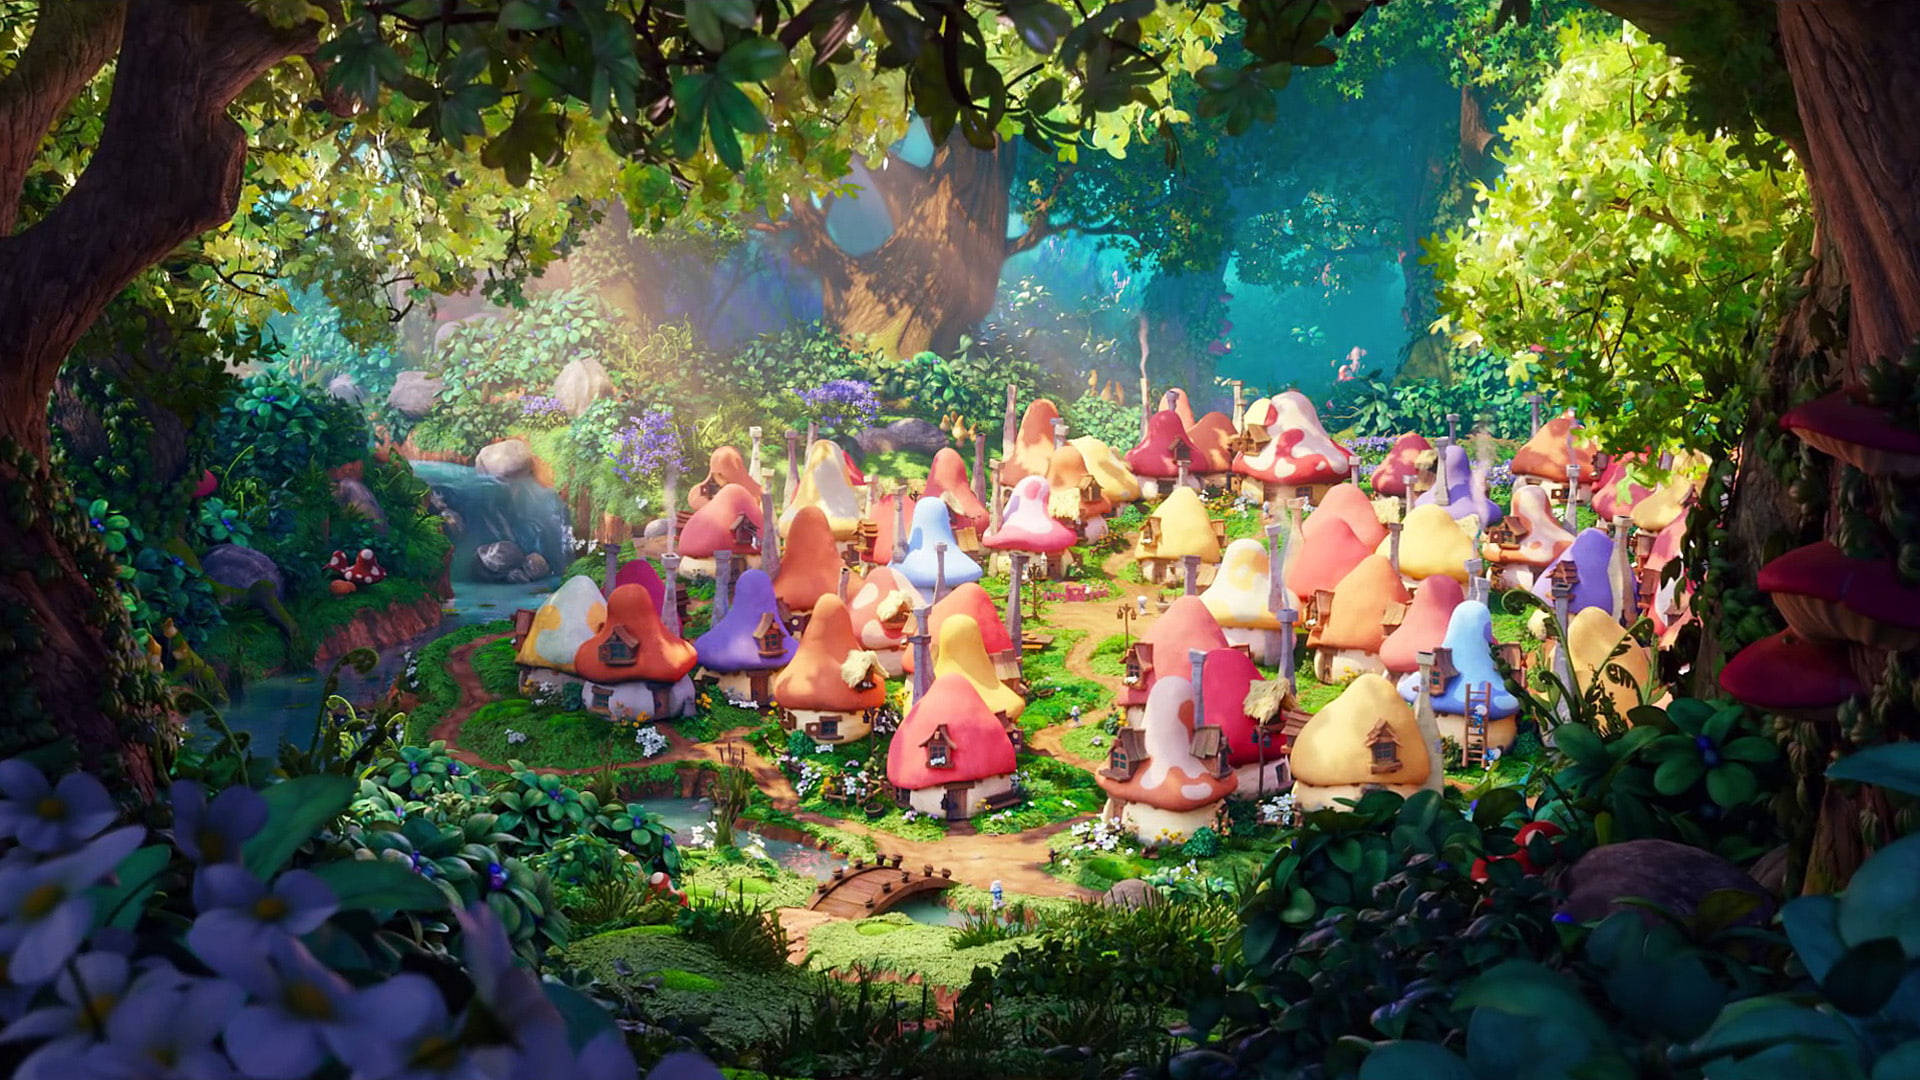 The Smurfs Fantasy Village